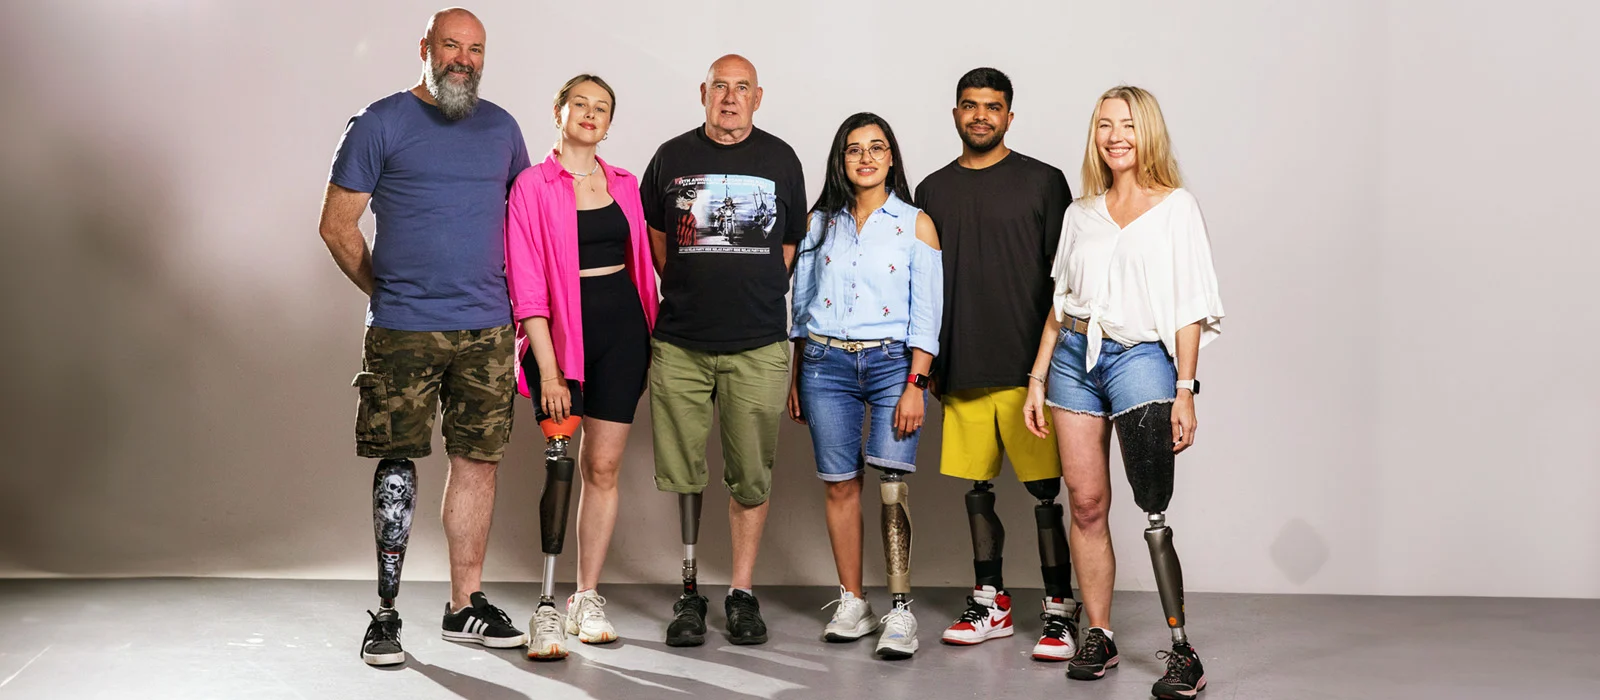 Six C-Leg Prosthetic Leg Users Standing against a white background. 